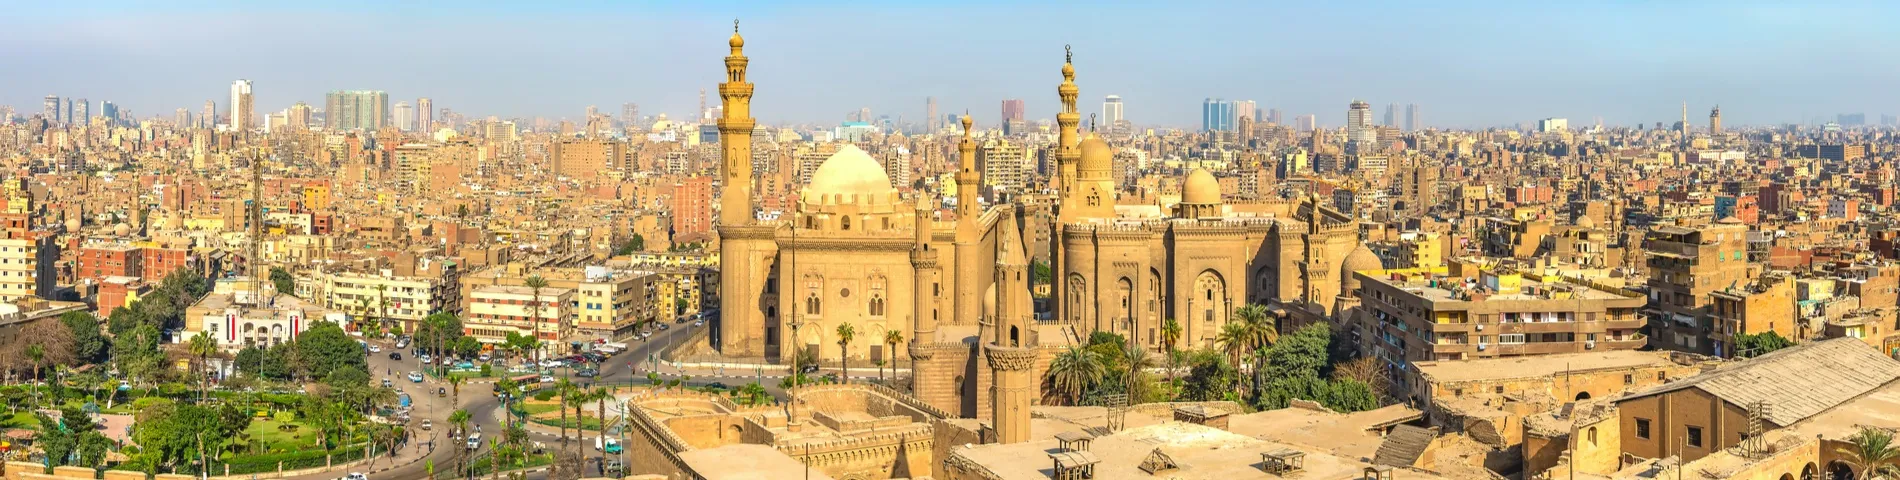 Kair - Standardowy